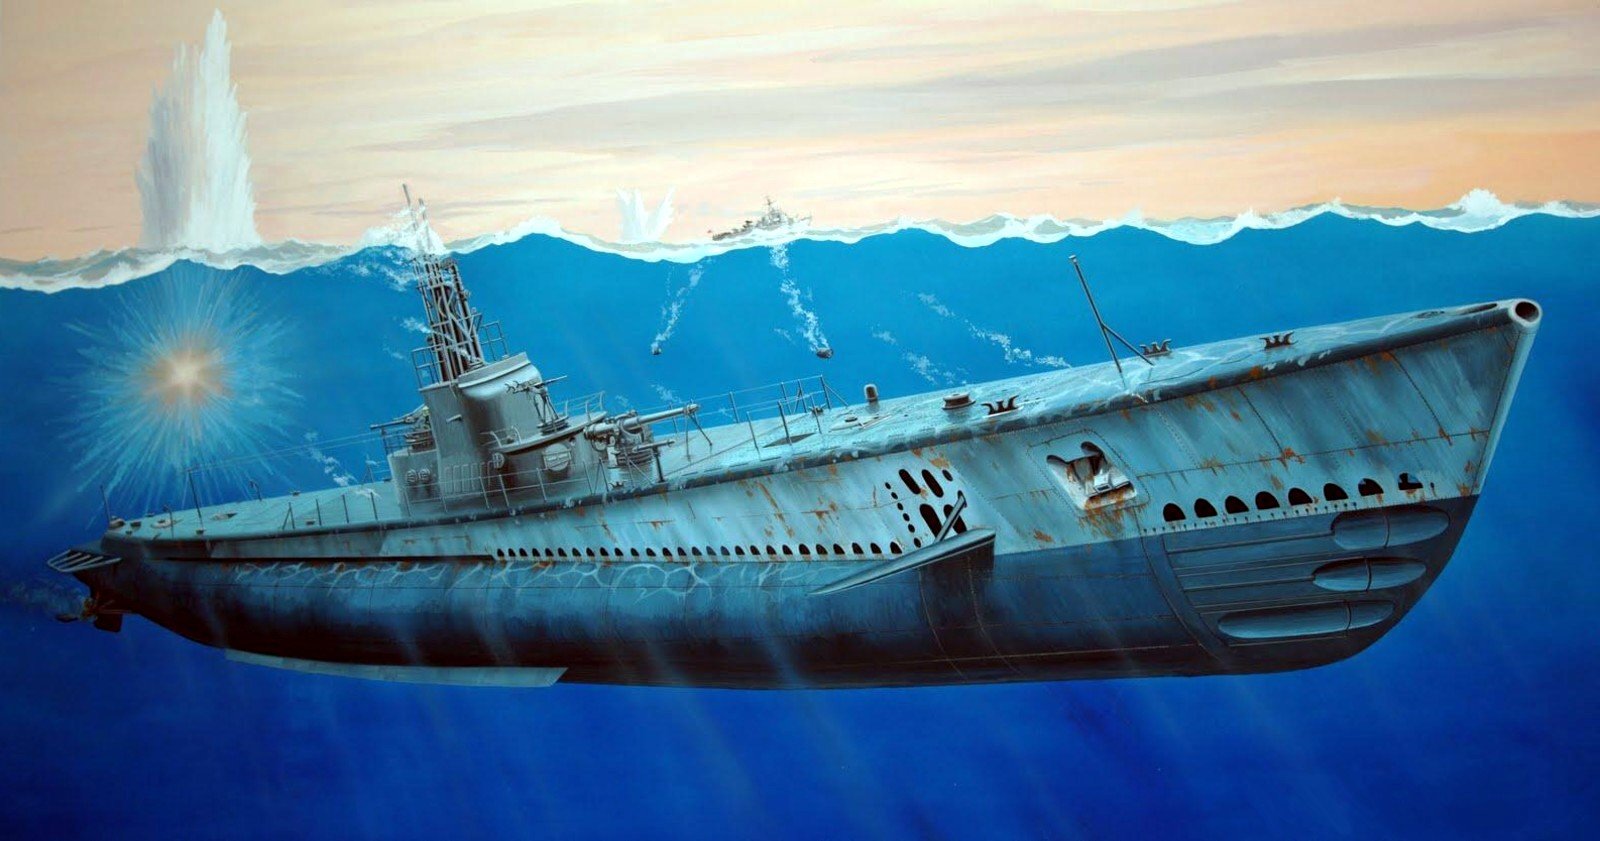  Explore the Collection Warships Submarine Submarine